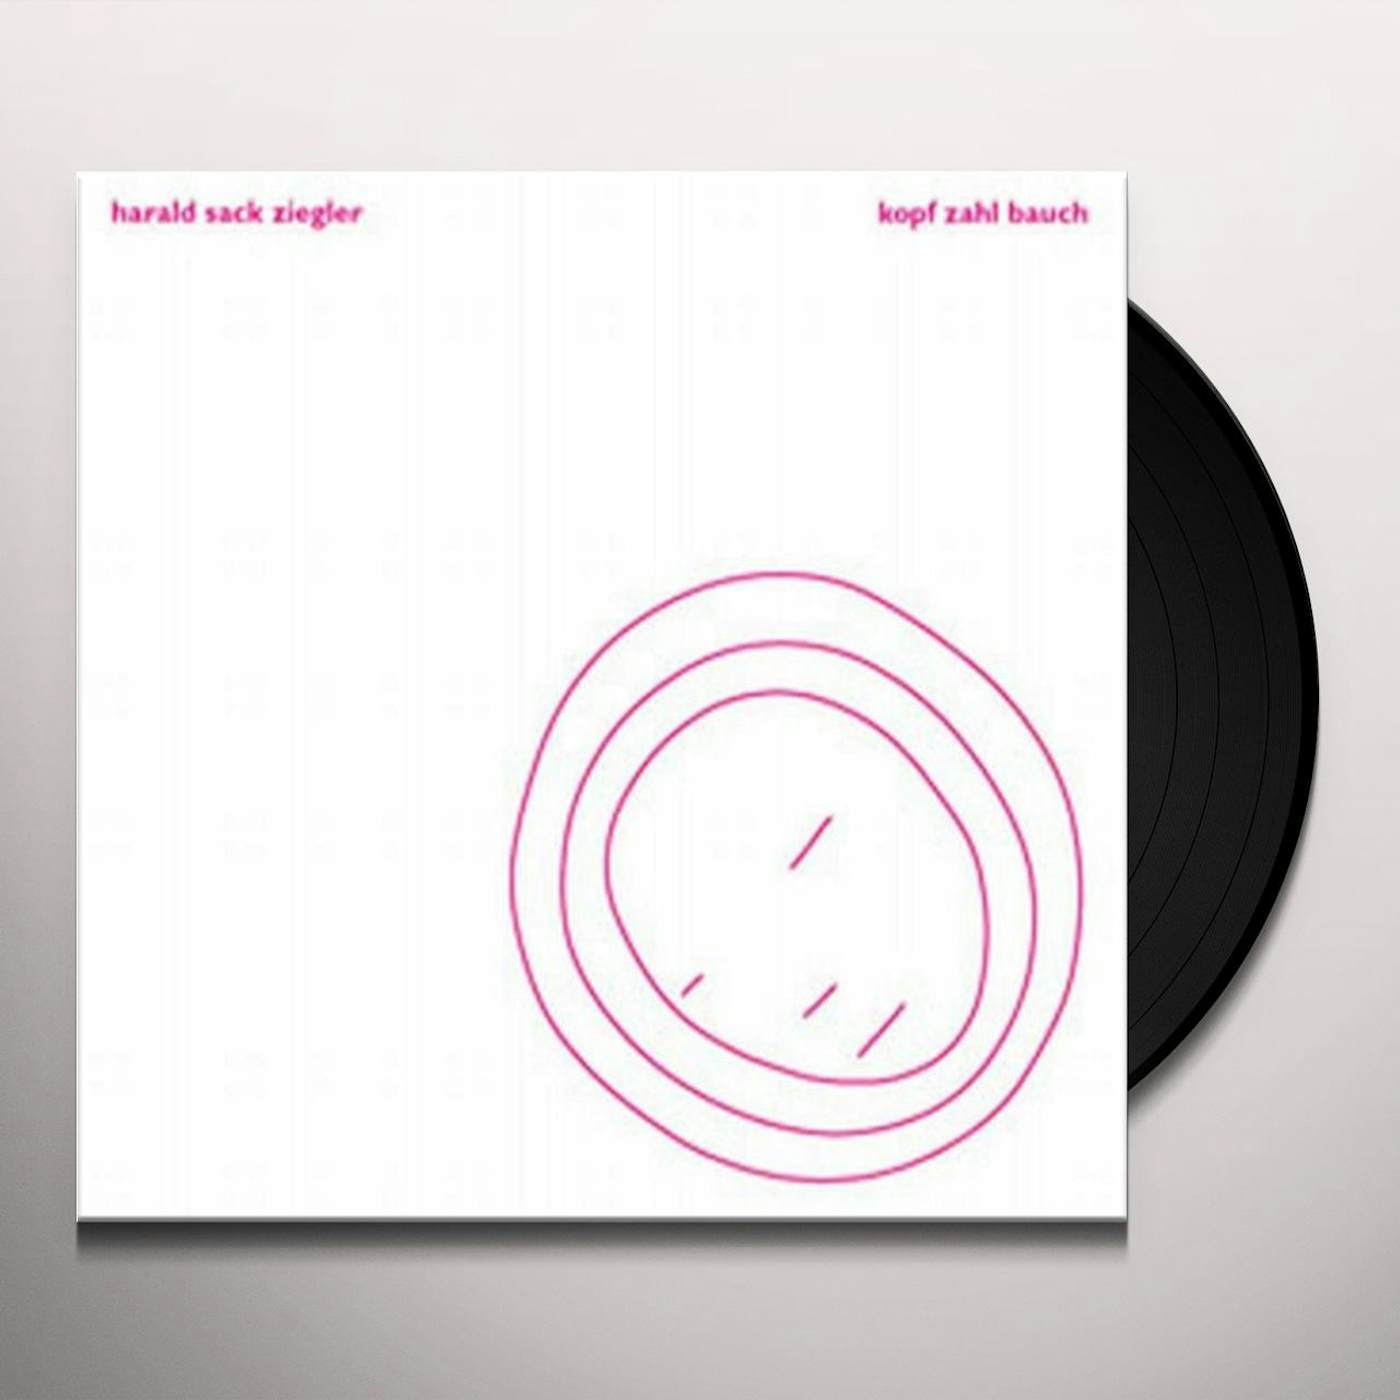 Harald Sack Ziegler Kopf Zahl Bauch Vinyl Record